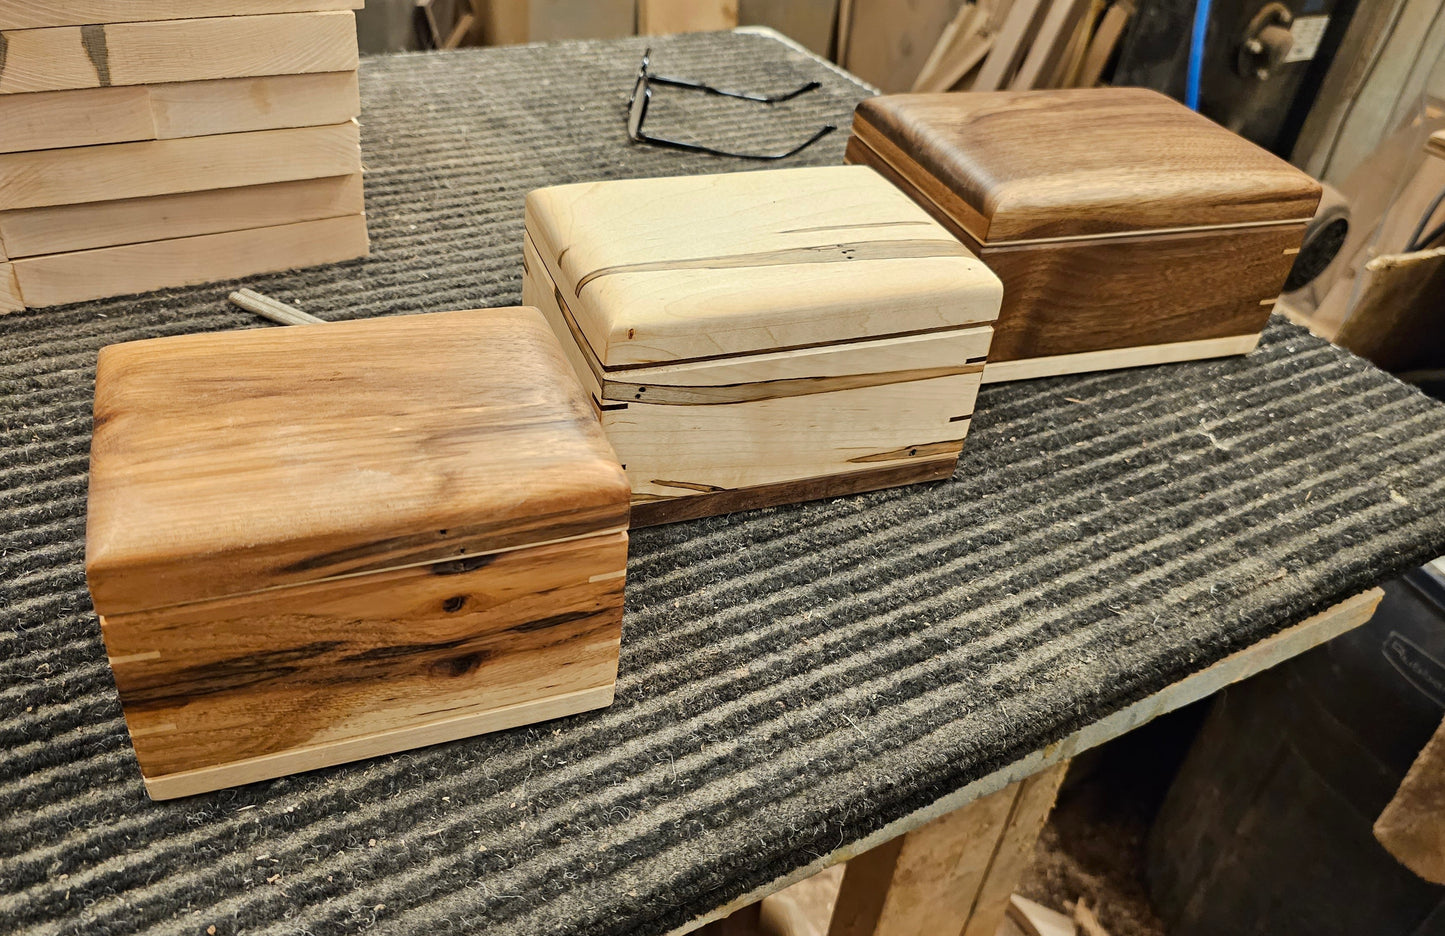 Personalized Custom Hardwood Keepsake/Memory box